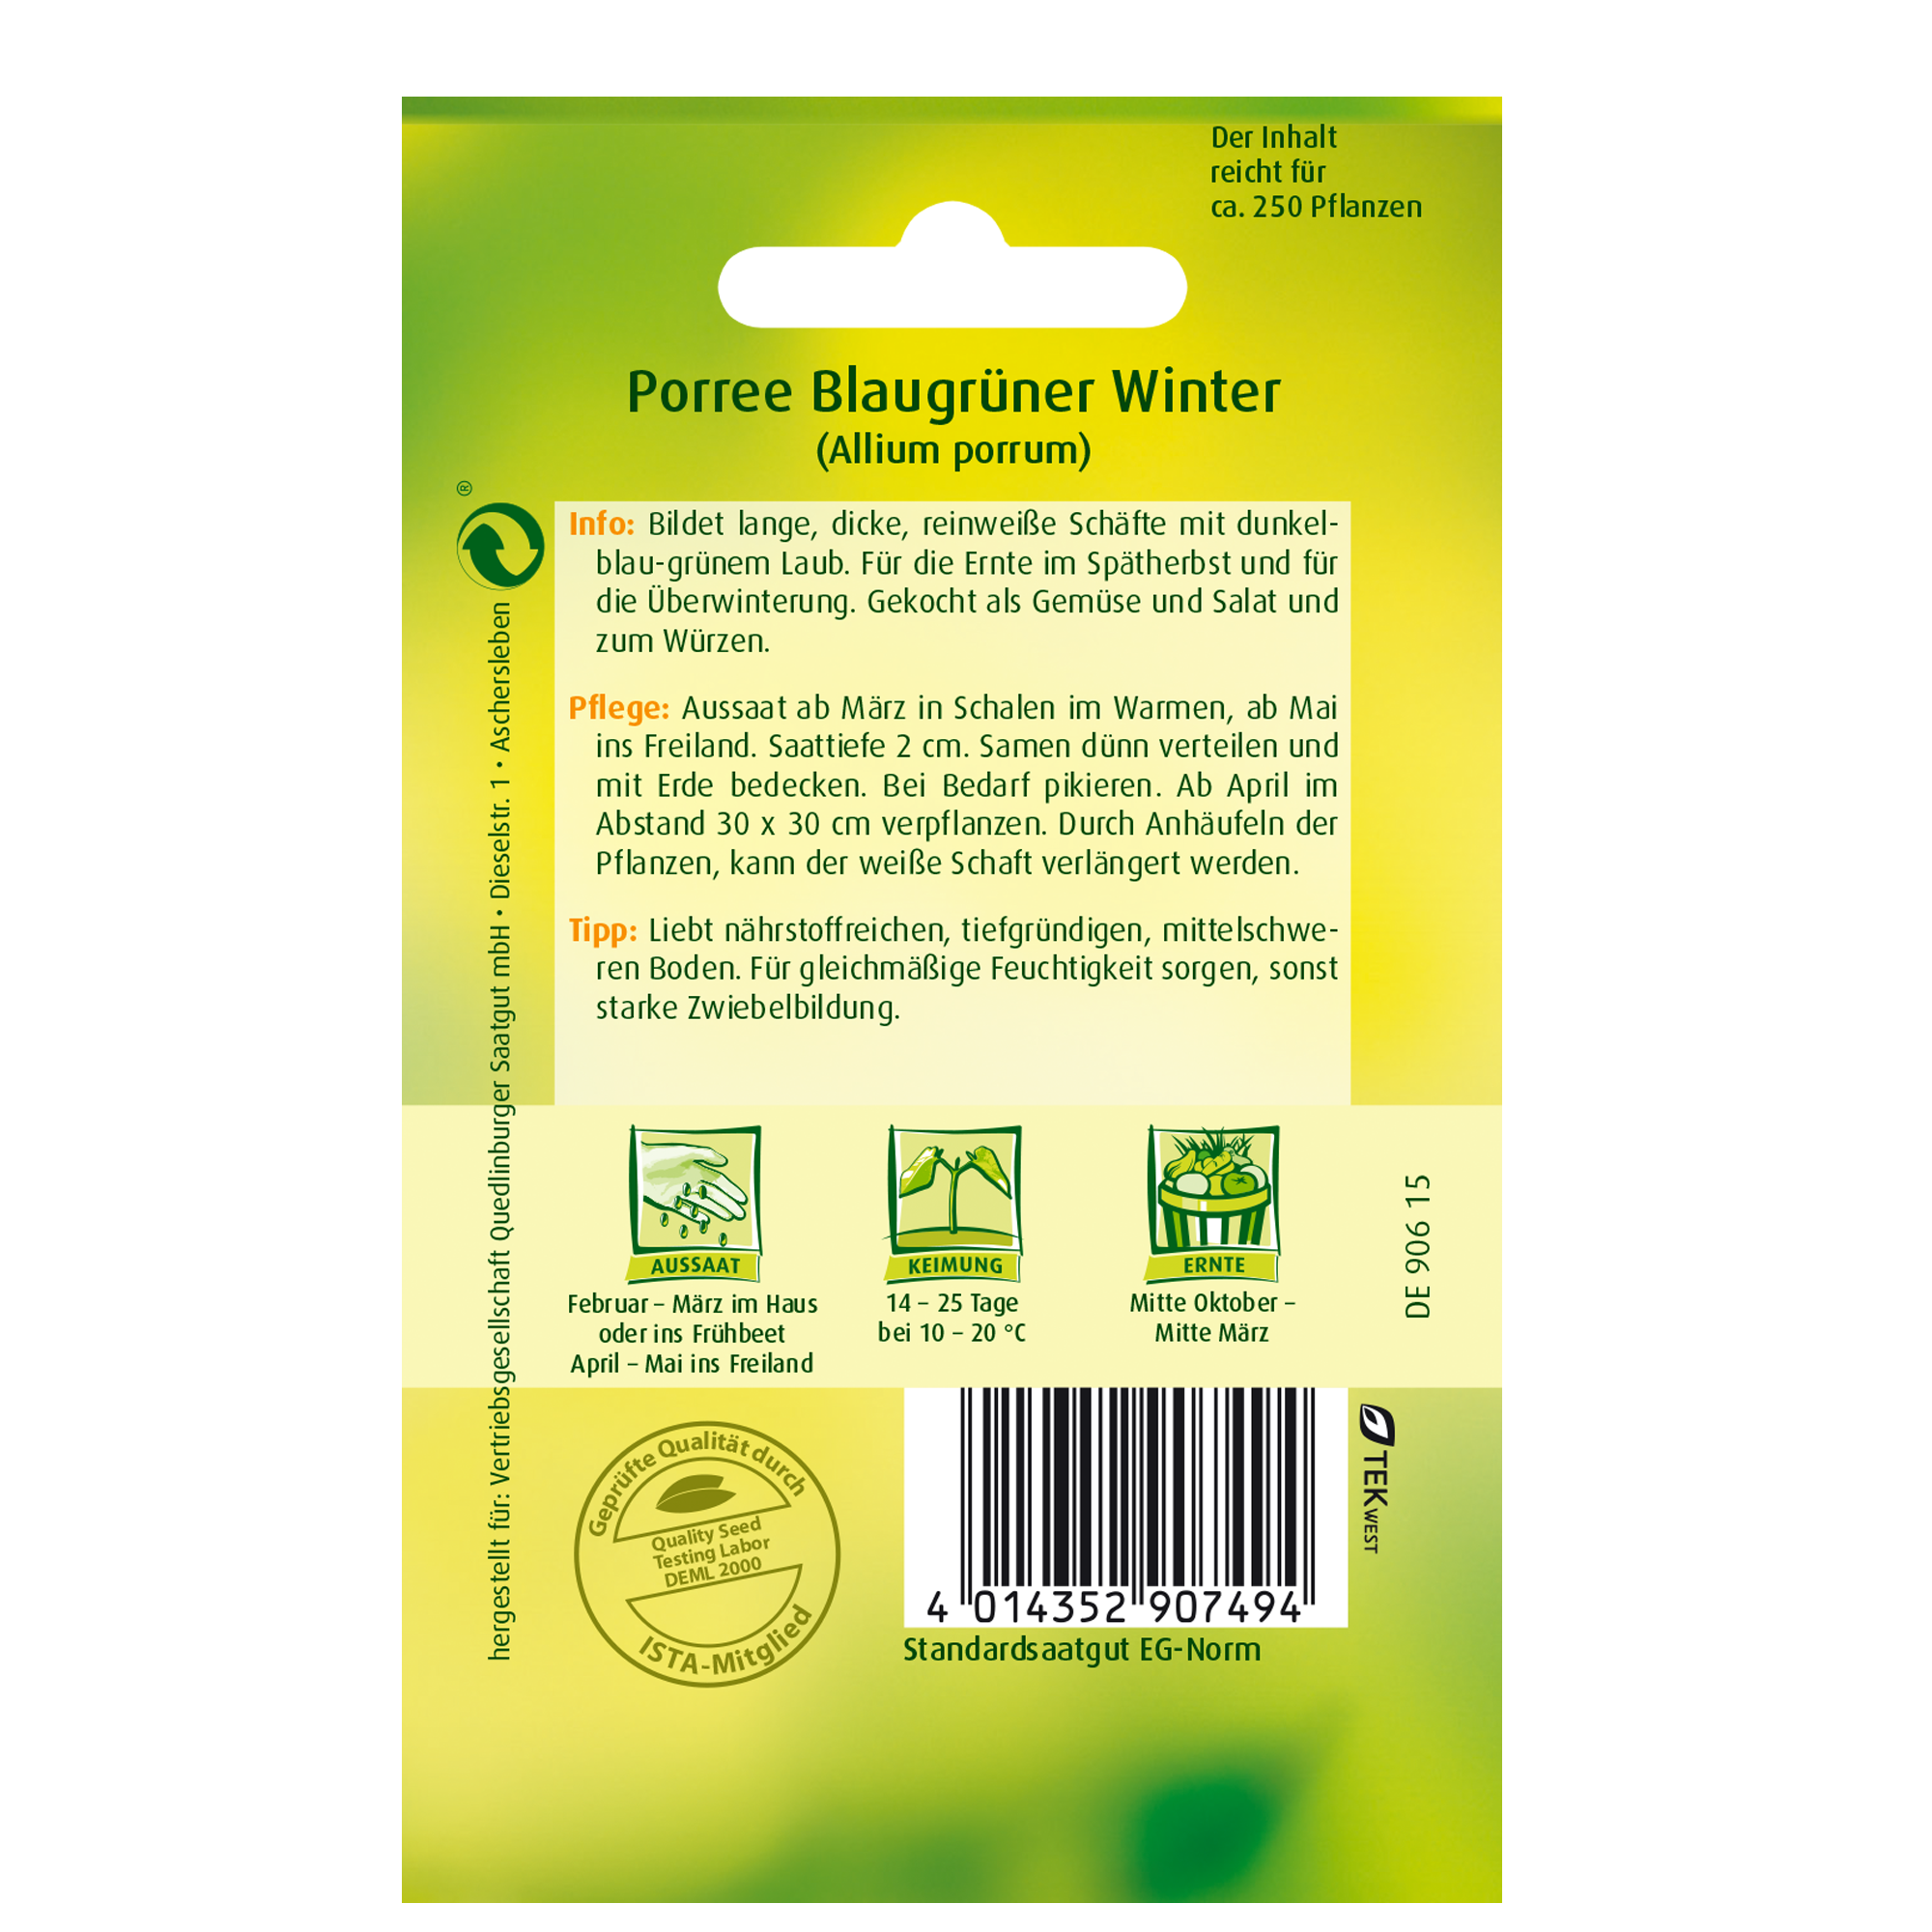 Porree 'Blaugrüner Winter' + product picture